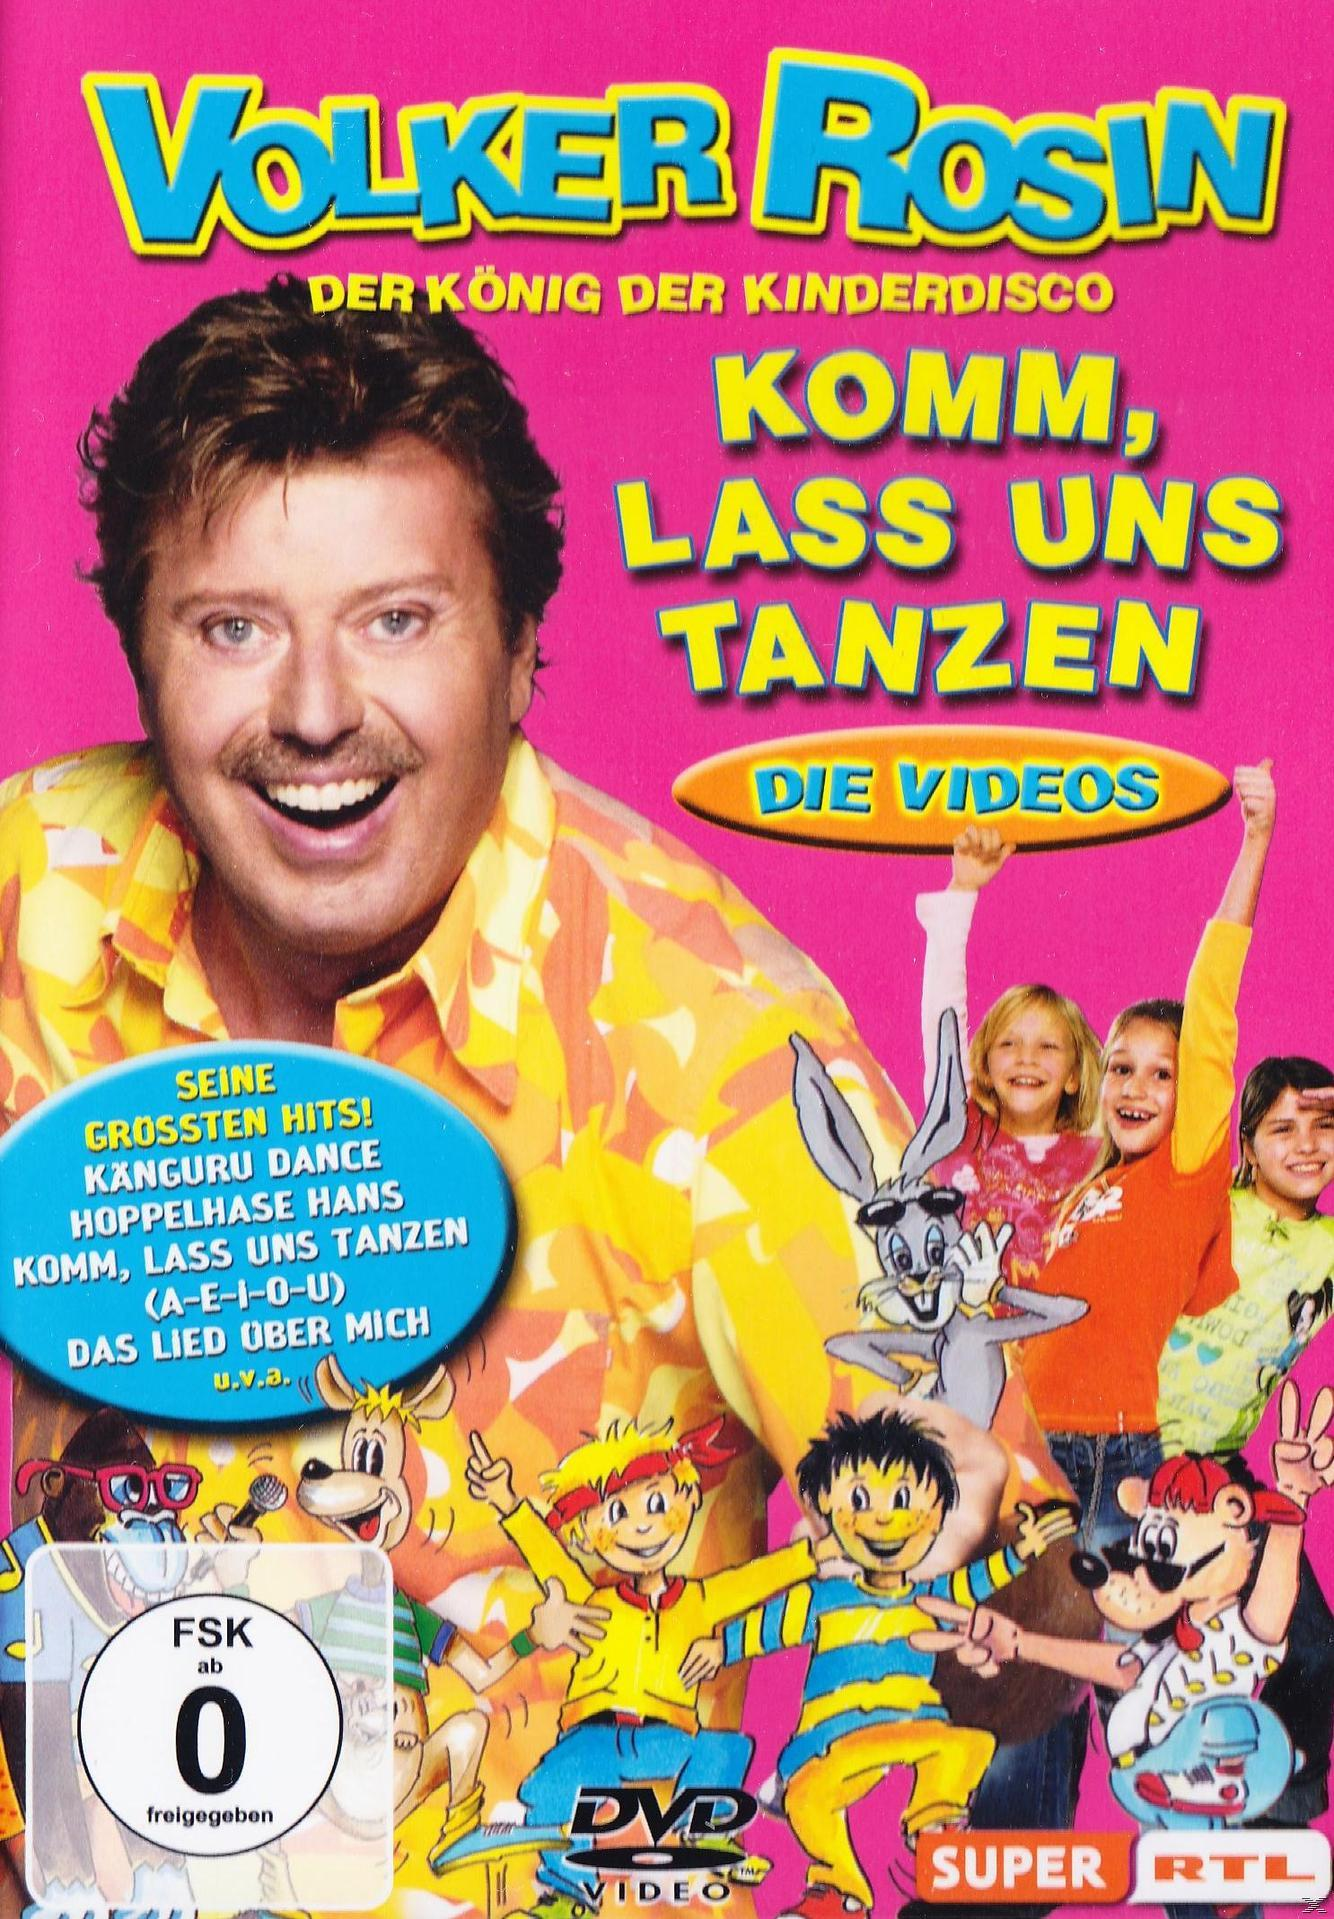 - Die Videos lass Volker uns - tanzen: - Rosin Rosin (DVD) Komm, Volker